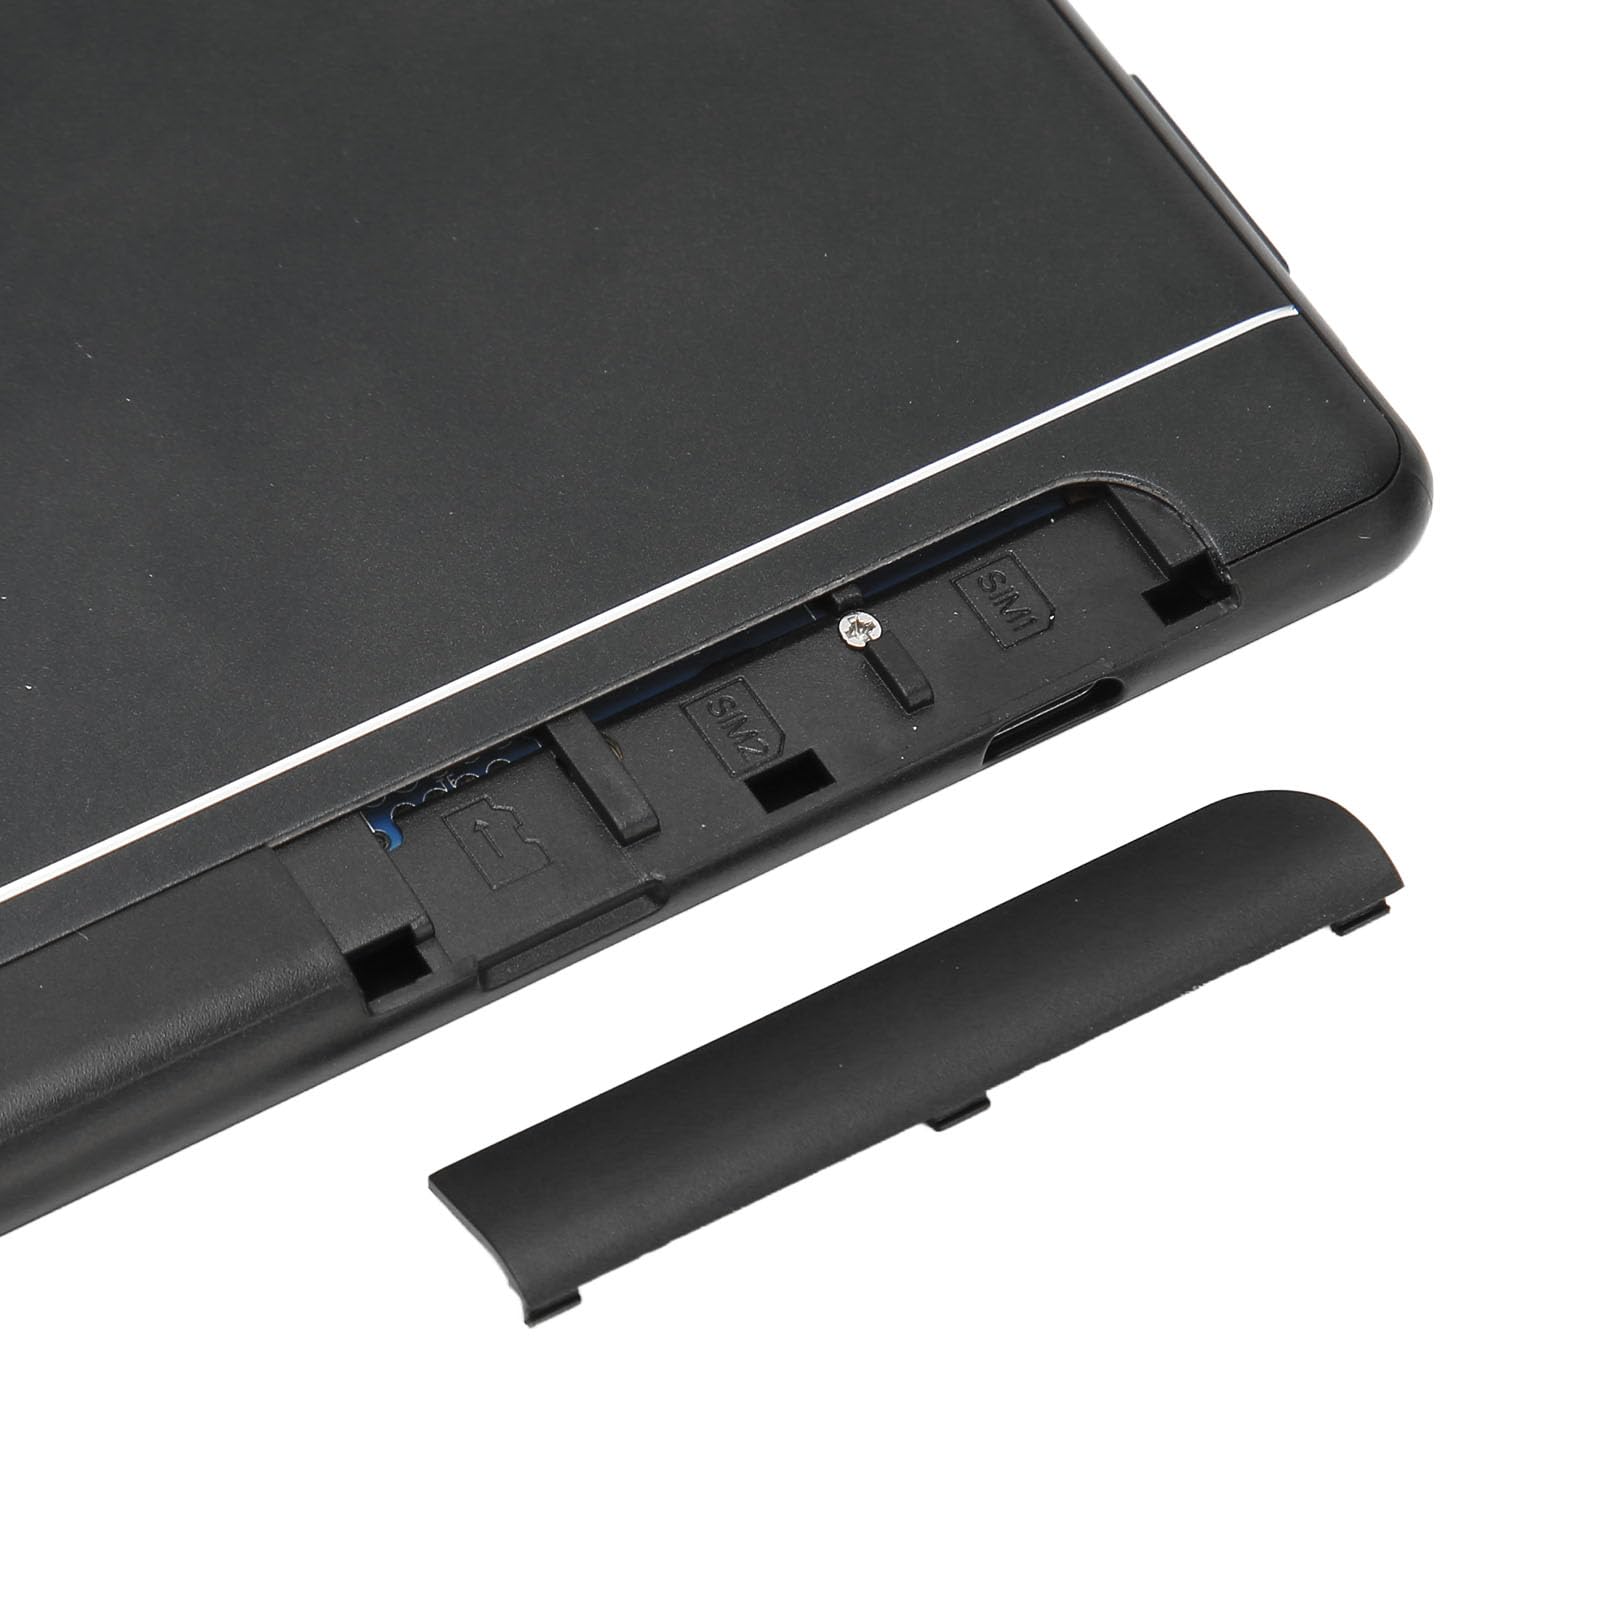 Honio Office Tablet, HD Tablet Octacore CPU Dual Camera US Plug 100‑240V (Black)